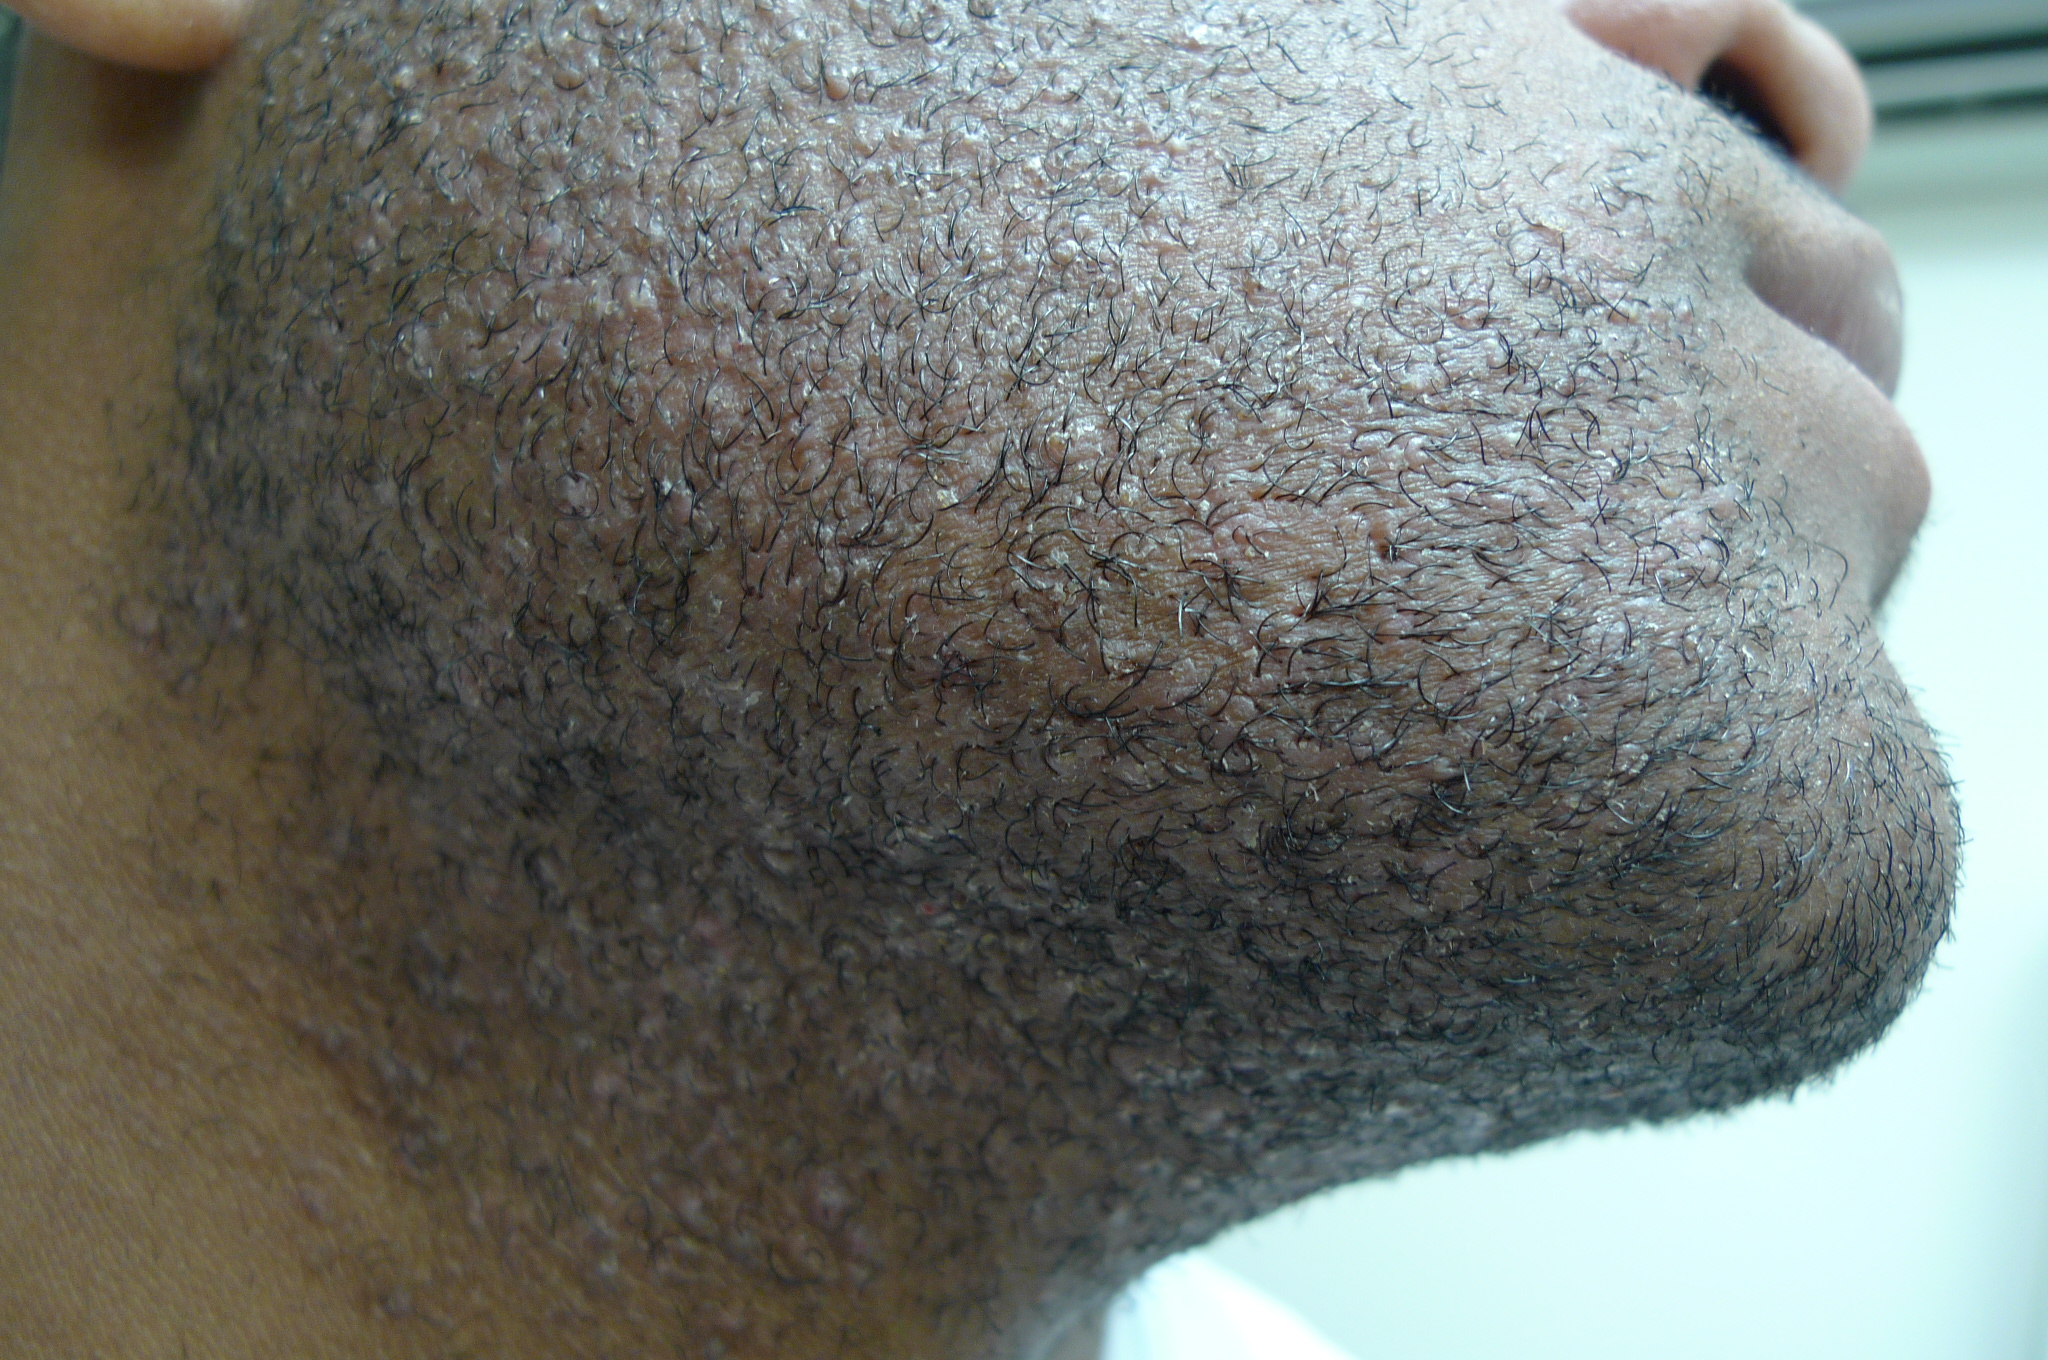 bump on base of shaft under skin